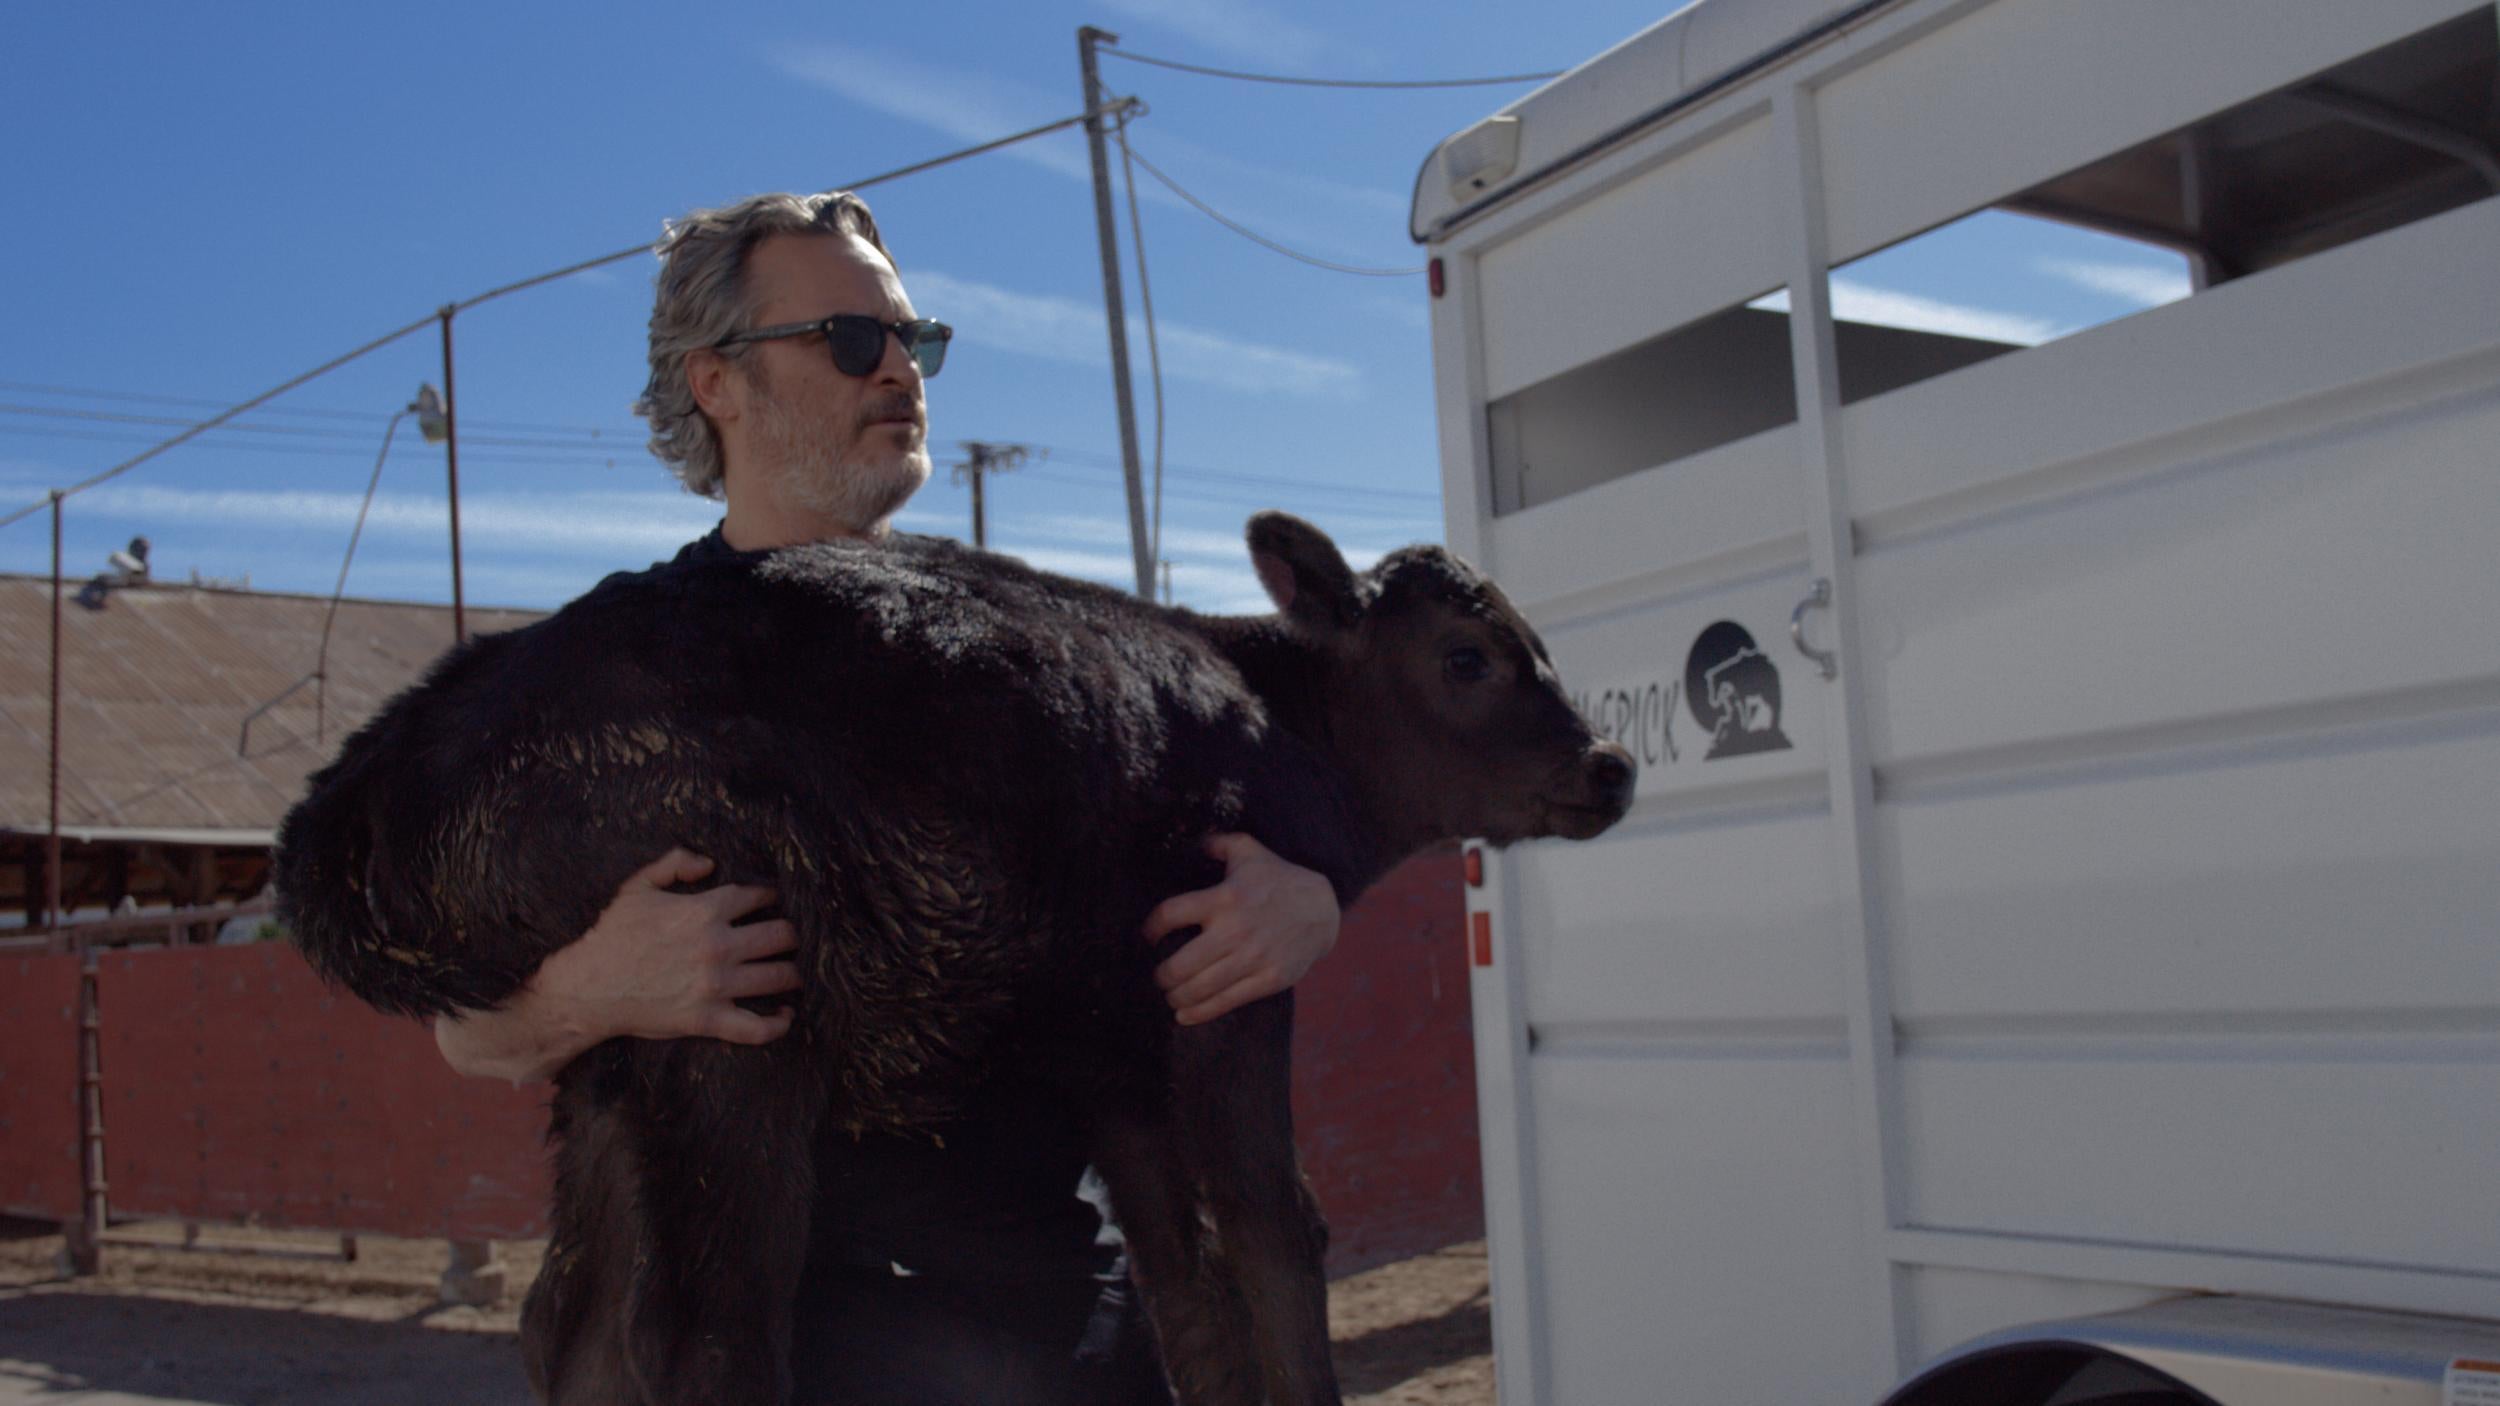 Phoenix rescued the newborn calf from the slaughterhouse (Shaun Monson)